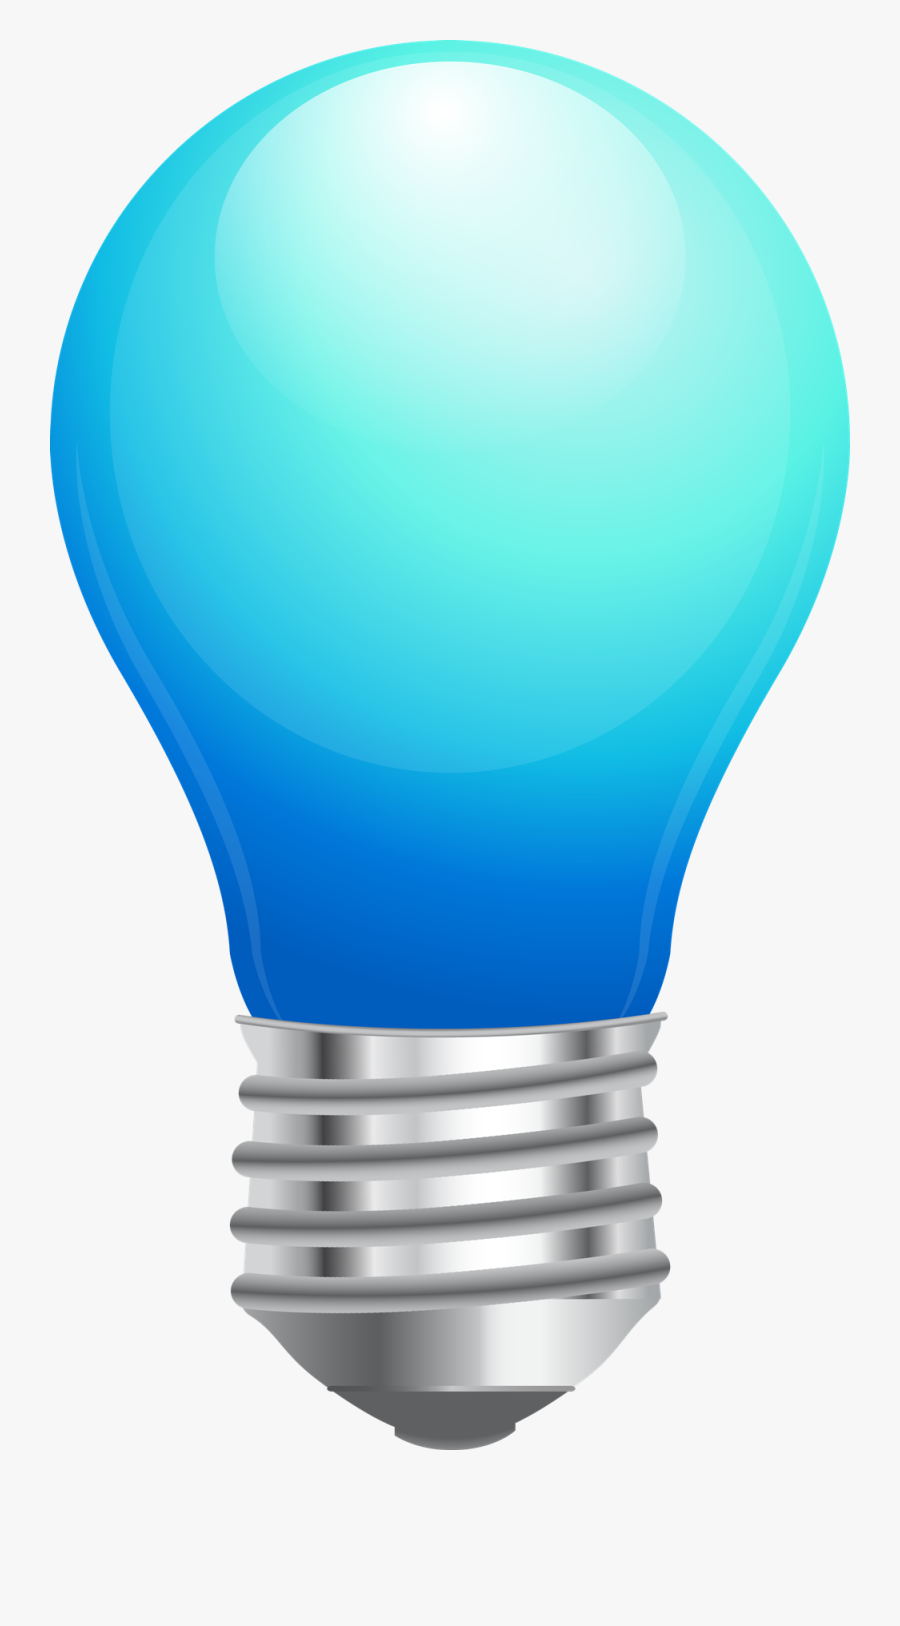 Light Bulb Image Free Download Best Light Bulb Image - Blue Light Bulb Clip Art, Transparent Clipart